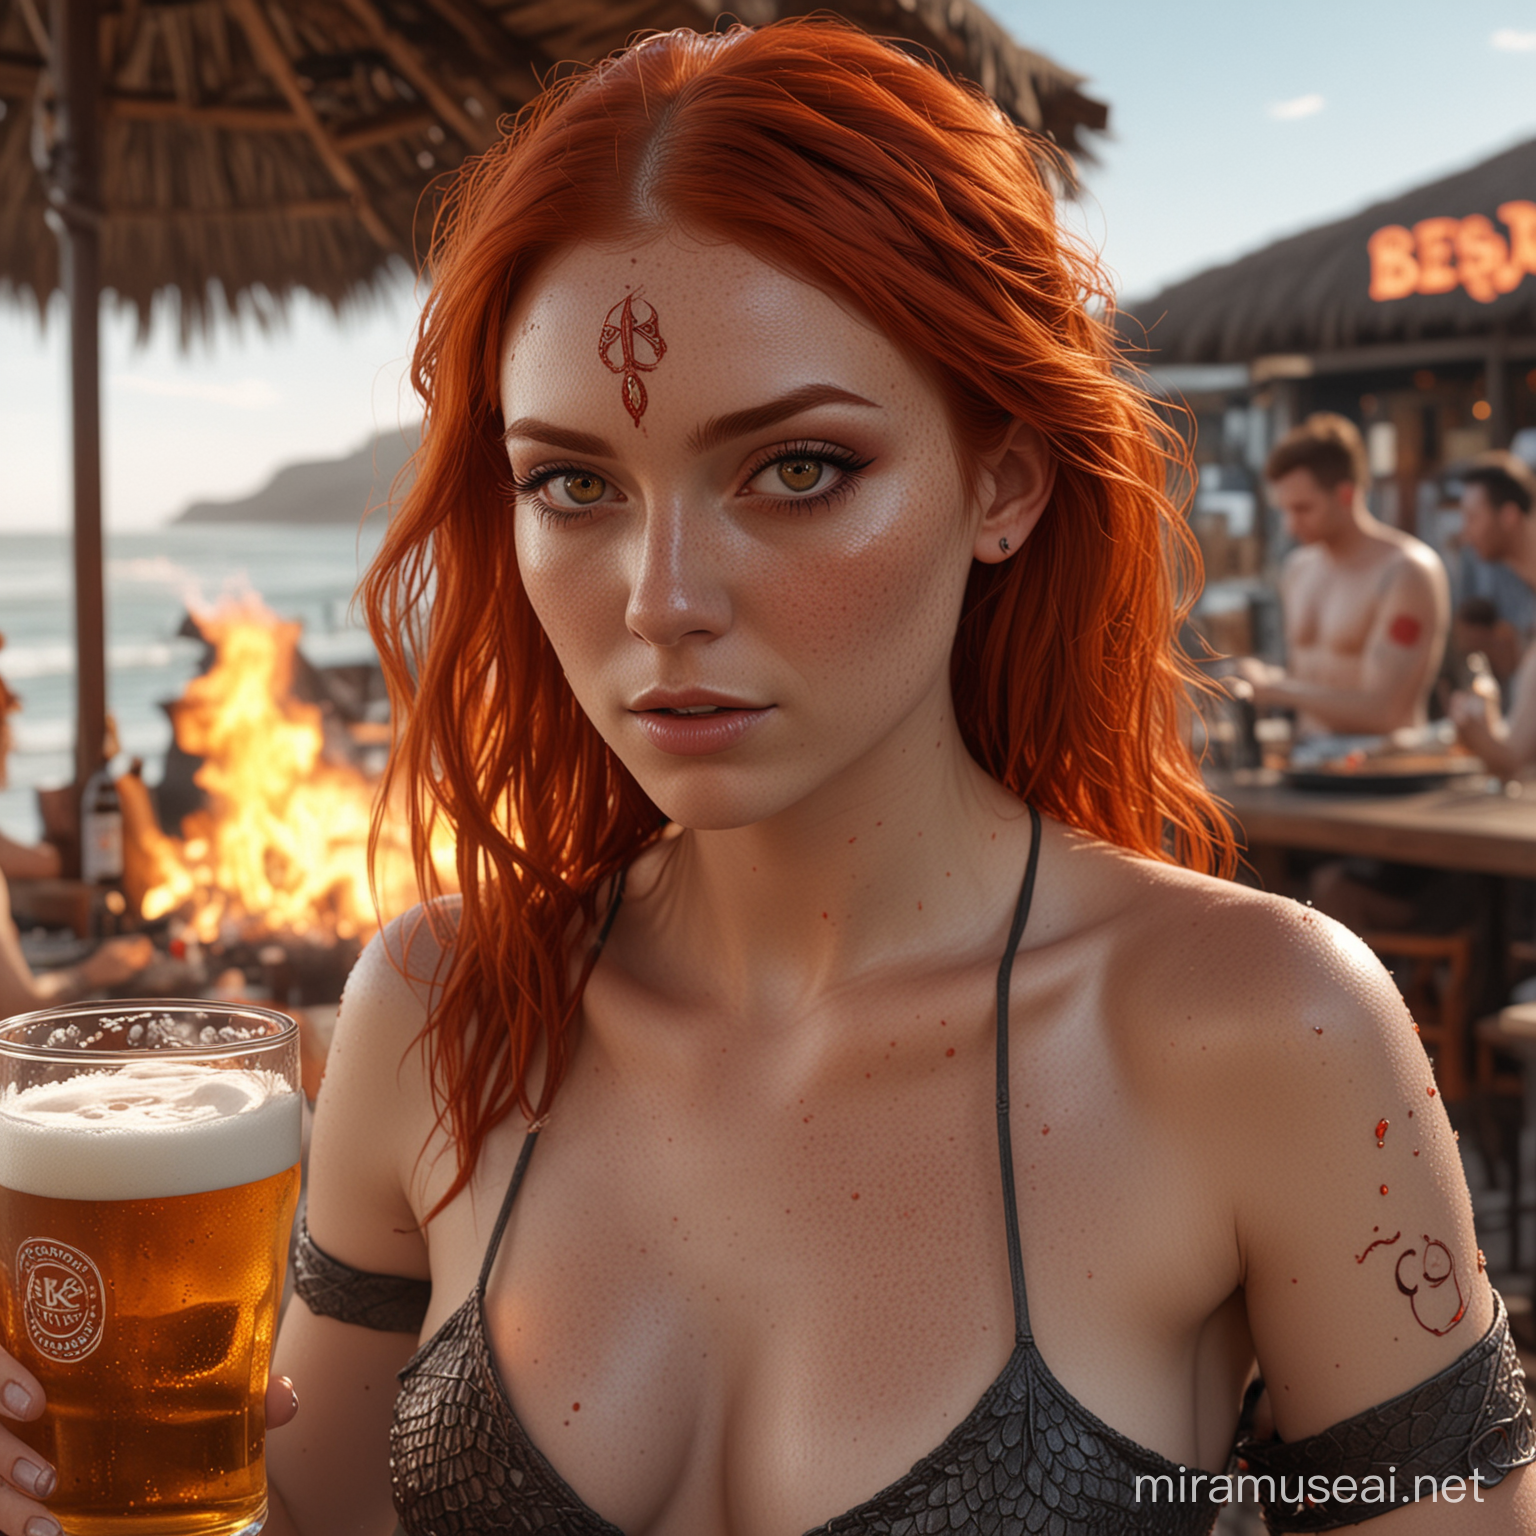 Fiery Redhead Female with Draconic Symbols at Beach Bar